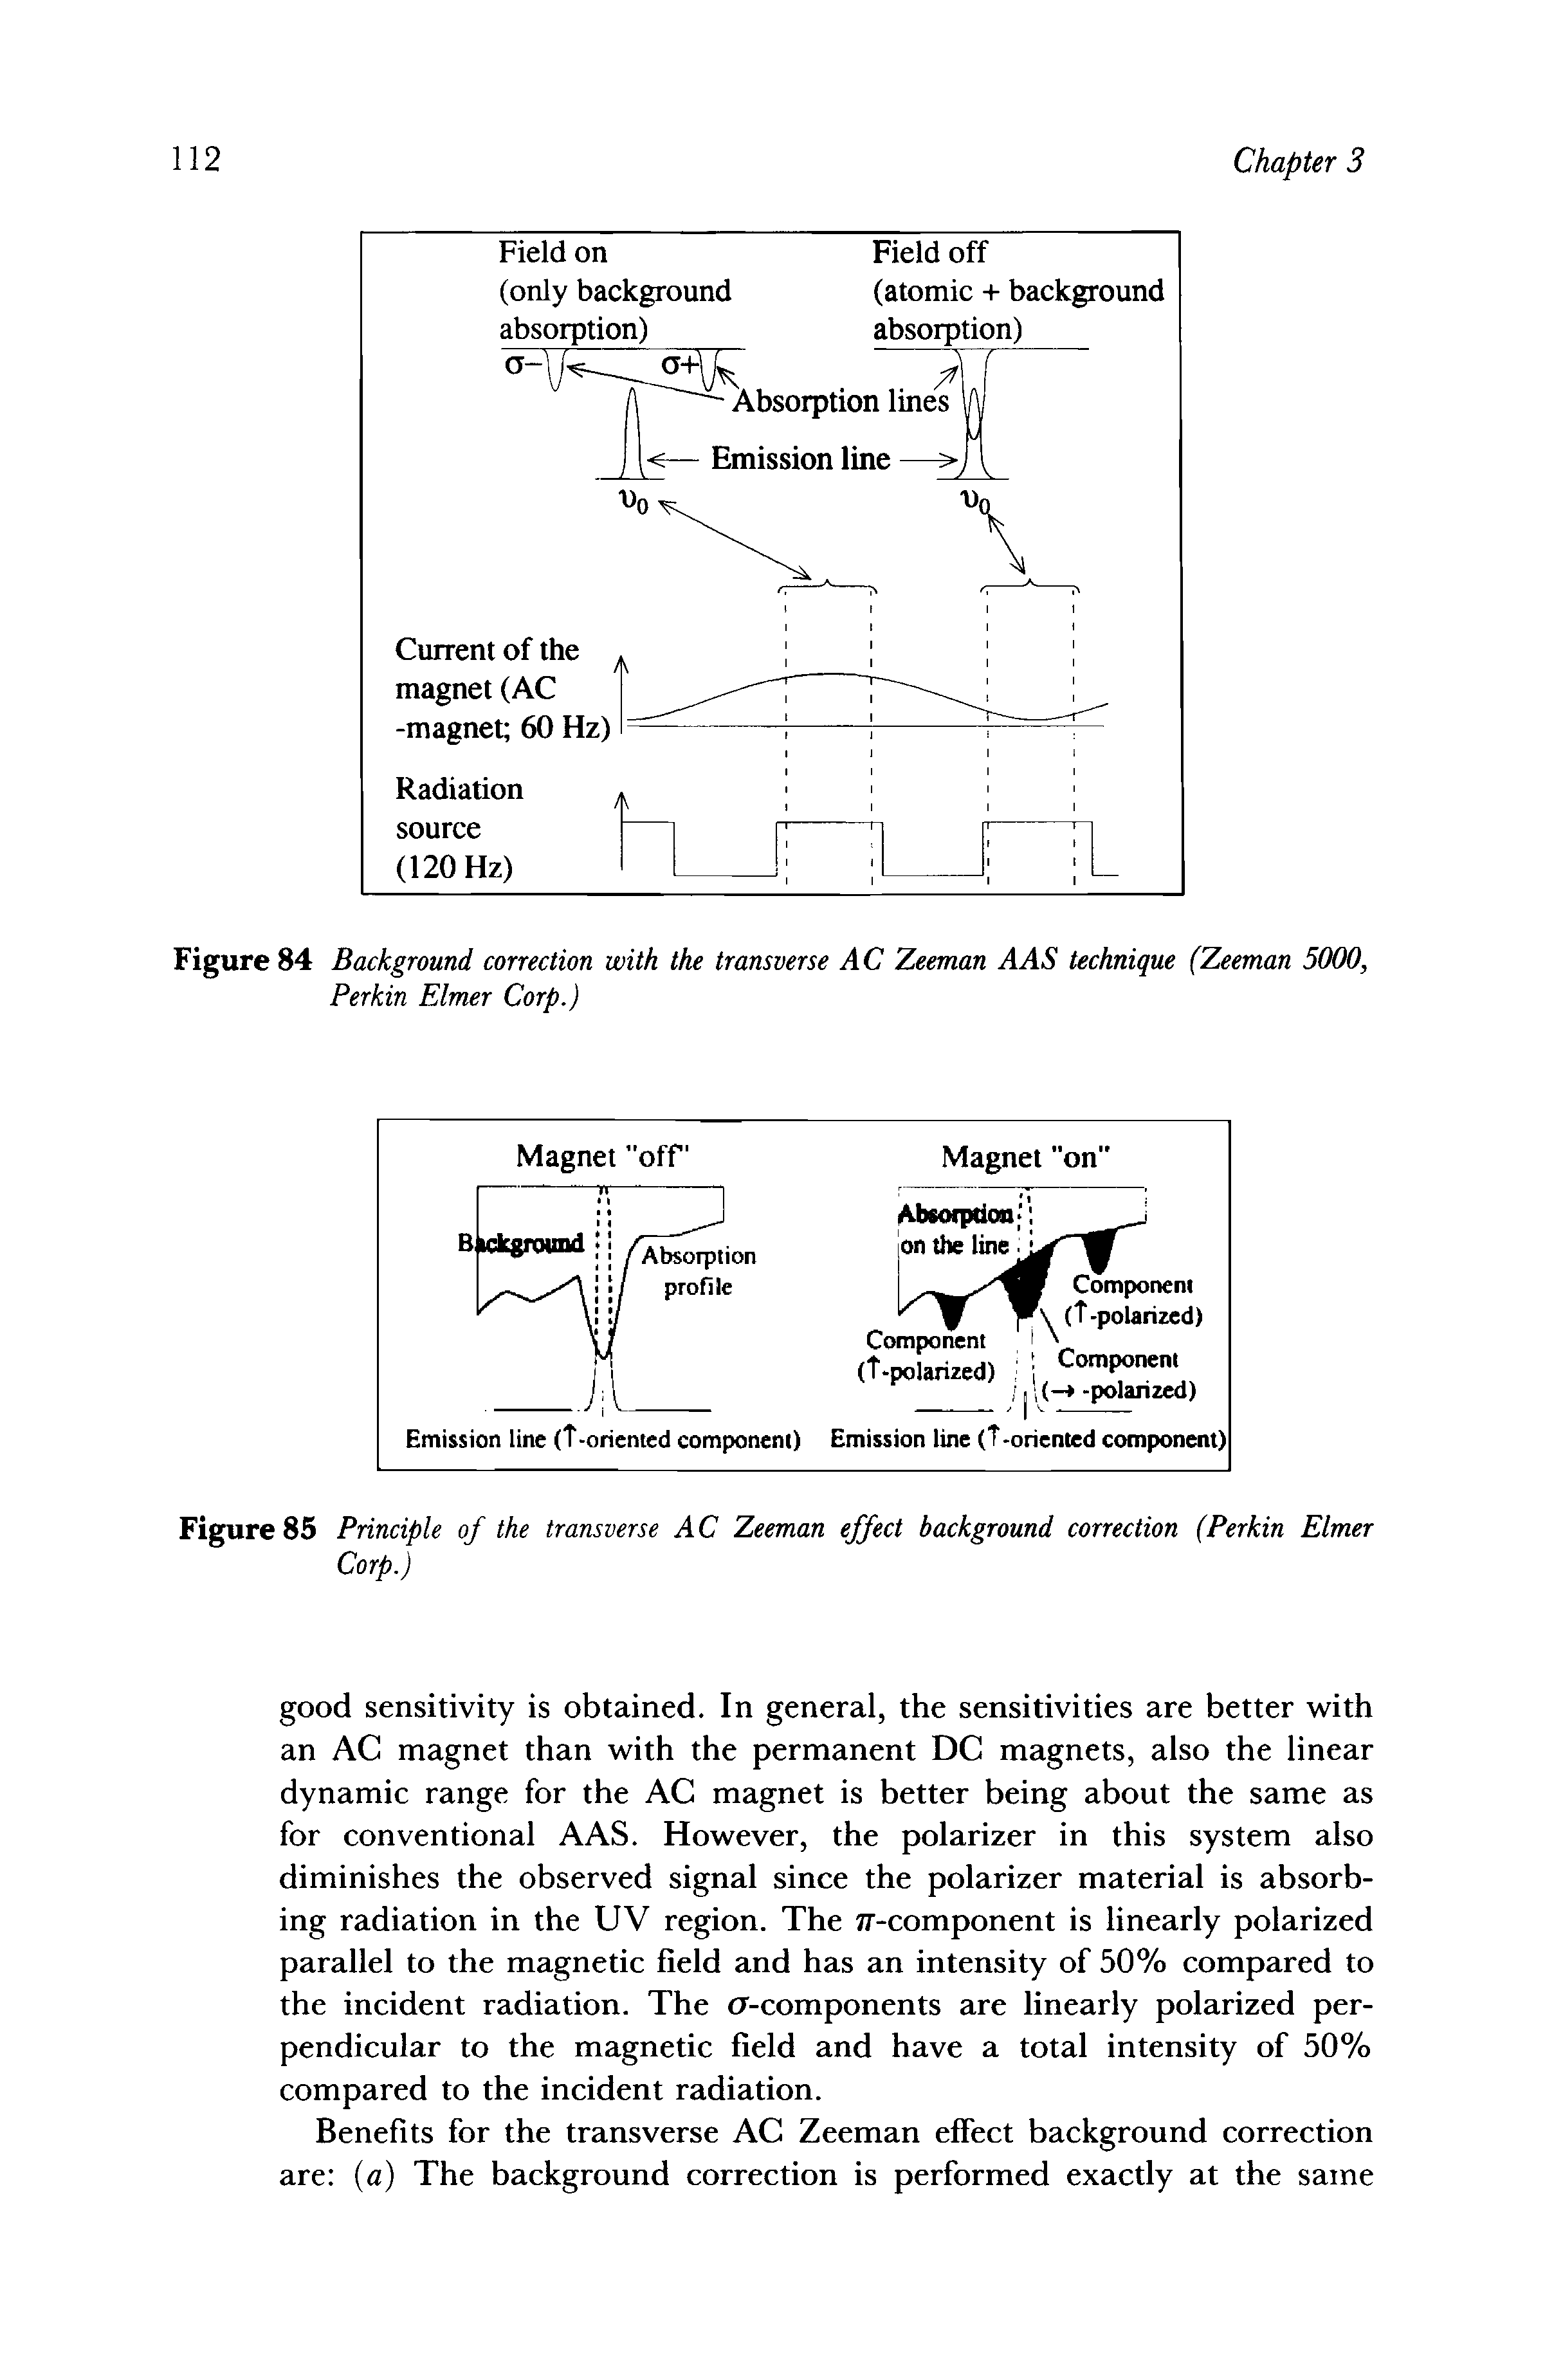 Figure 85 Principle of the transverse AC Zeeman effect background correction (Perkin Elmer Corp.)...